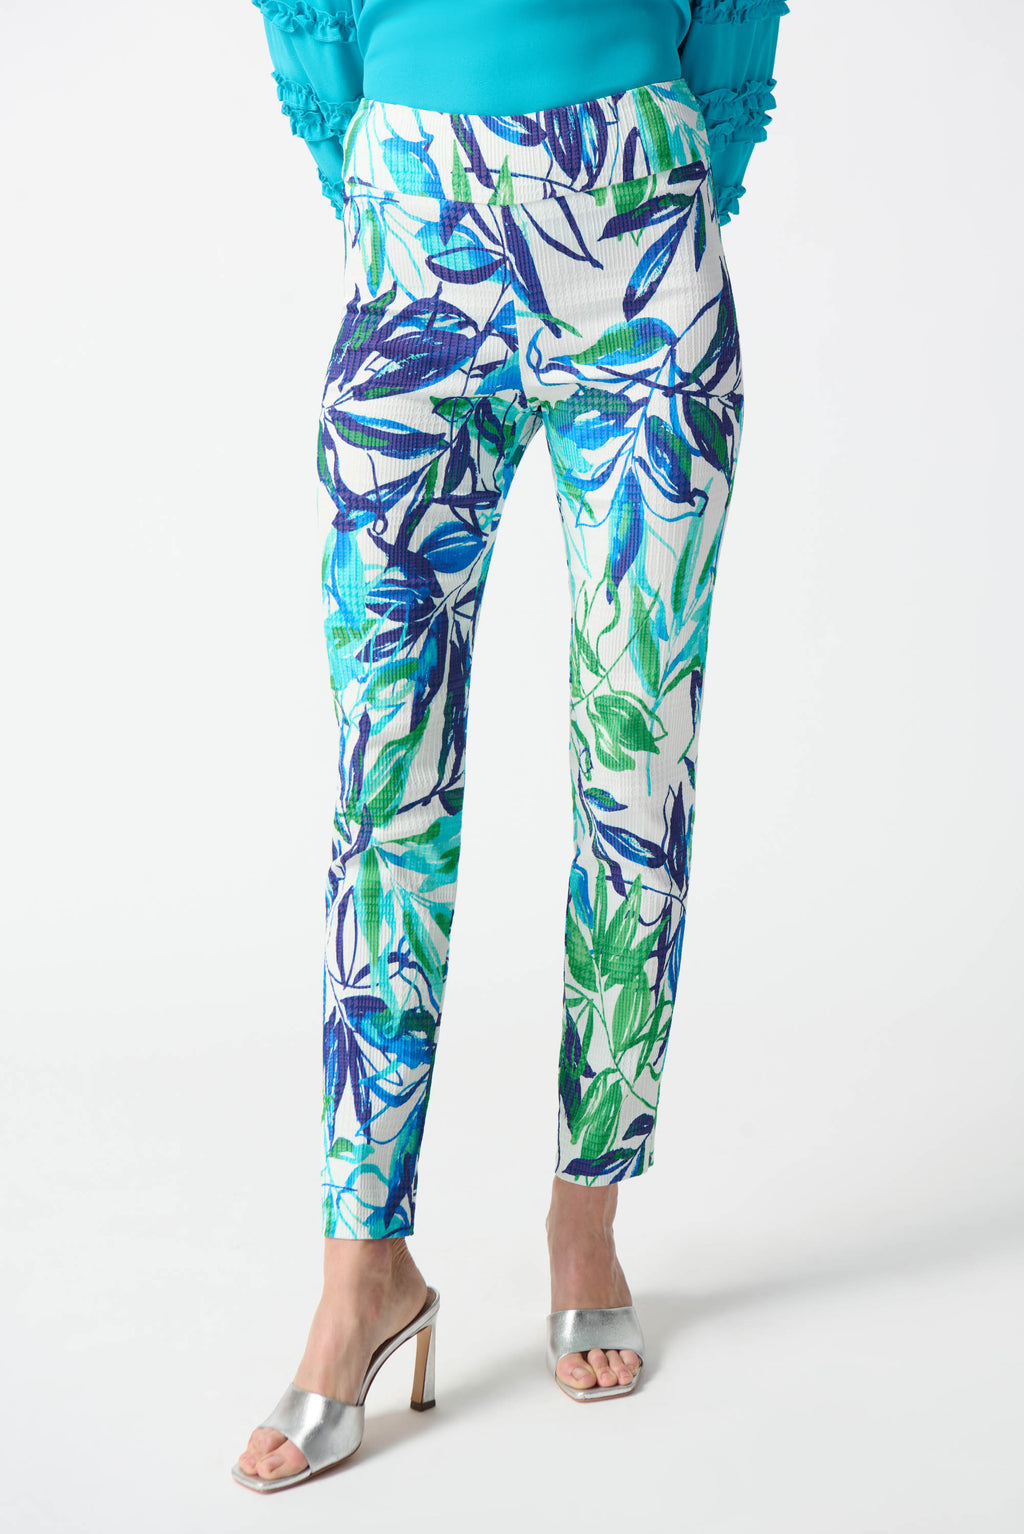 Joseph Ribkoff Vanilla/Multi Tropical Print Slim Fit Pants Style 242000